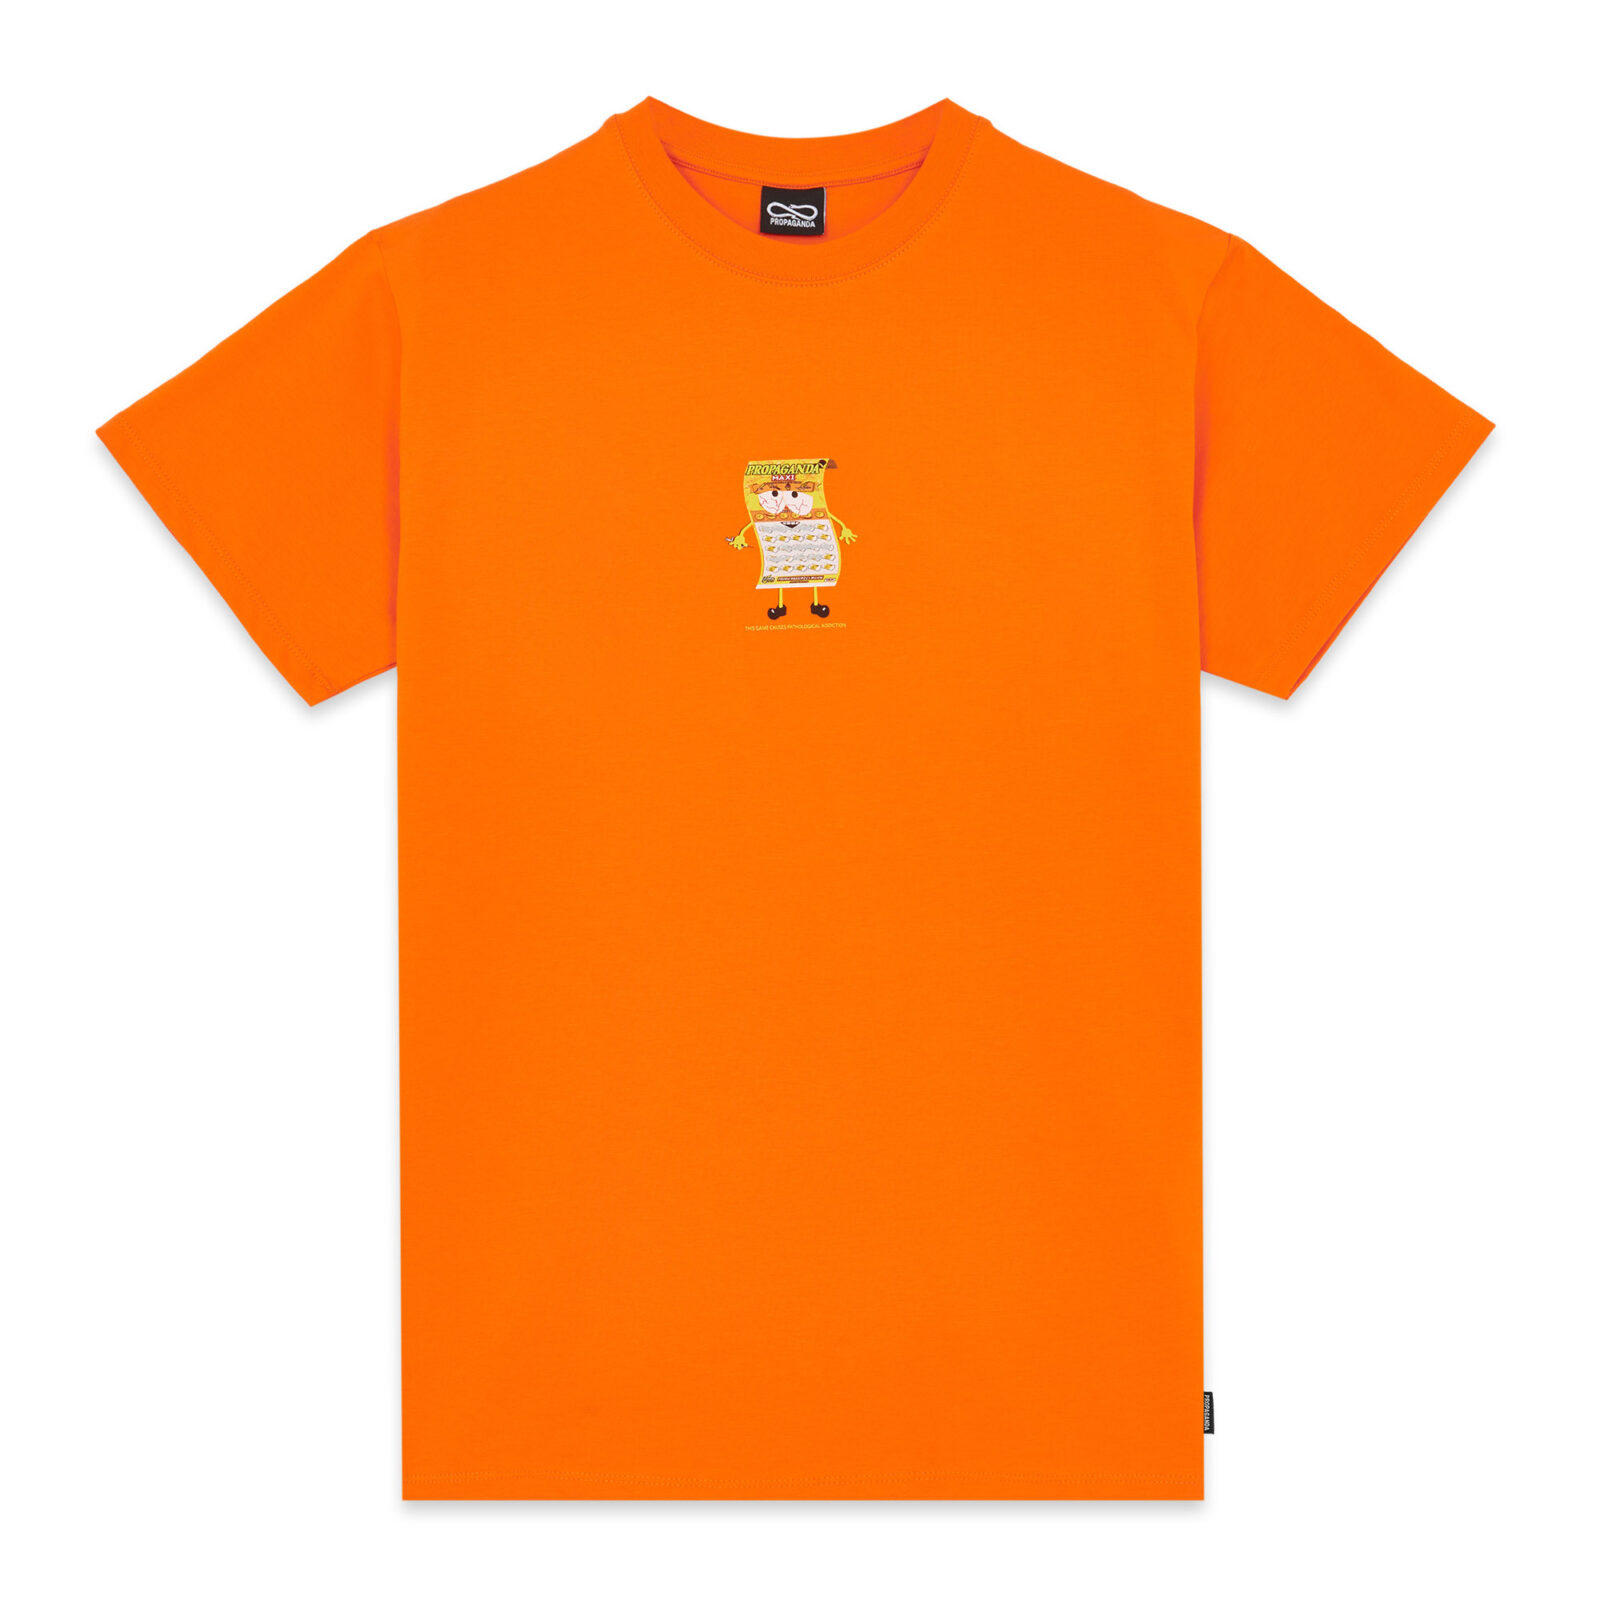 Winner Tee - Orange - Propaganda Clothing Brand | Propaganda Clothing ...